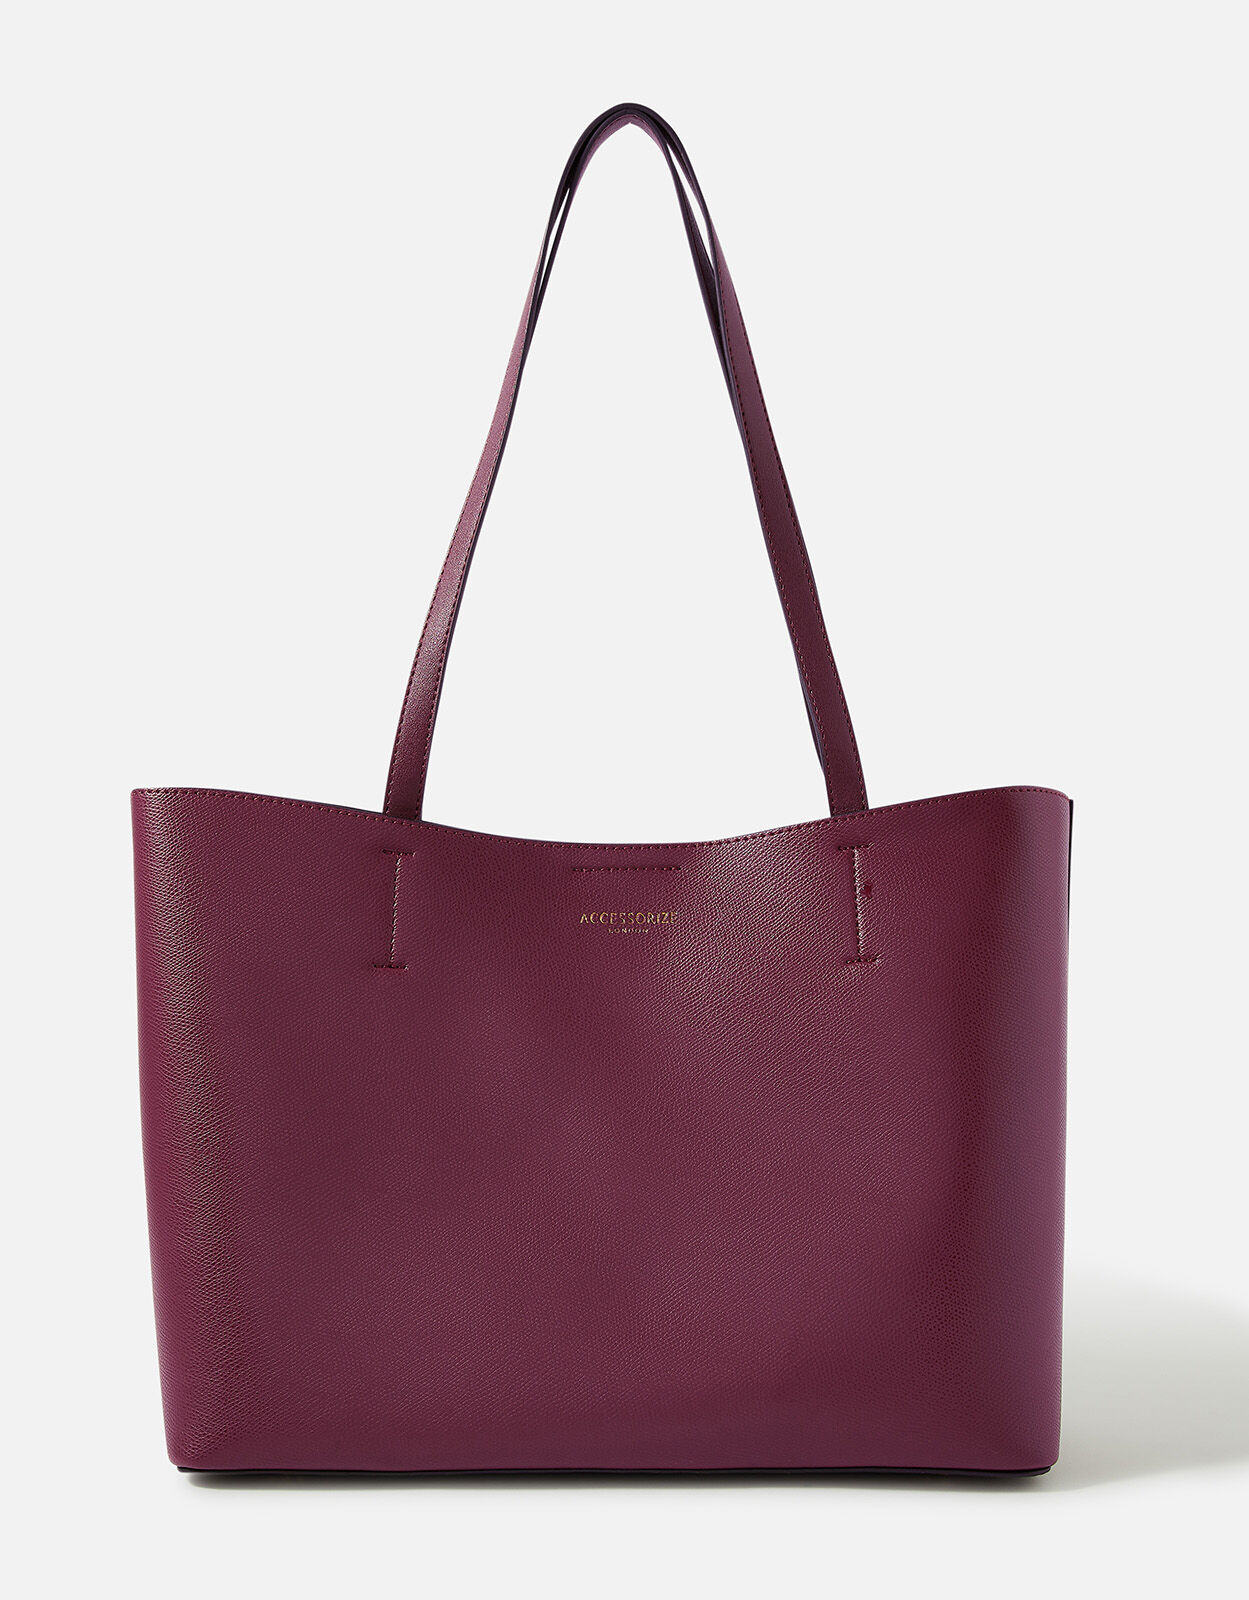 Multicolor, Cute, Special Vegan Luxury Handbags - Buy Designer Vegan Bags,  Handbags, Purses Online — FruitenVeg vegan purses and bags